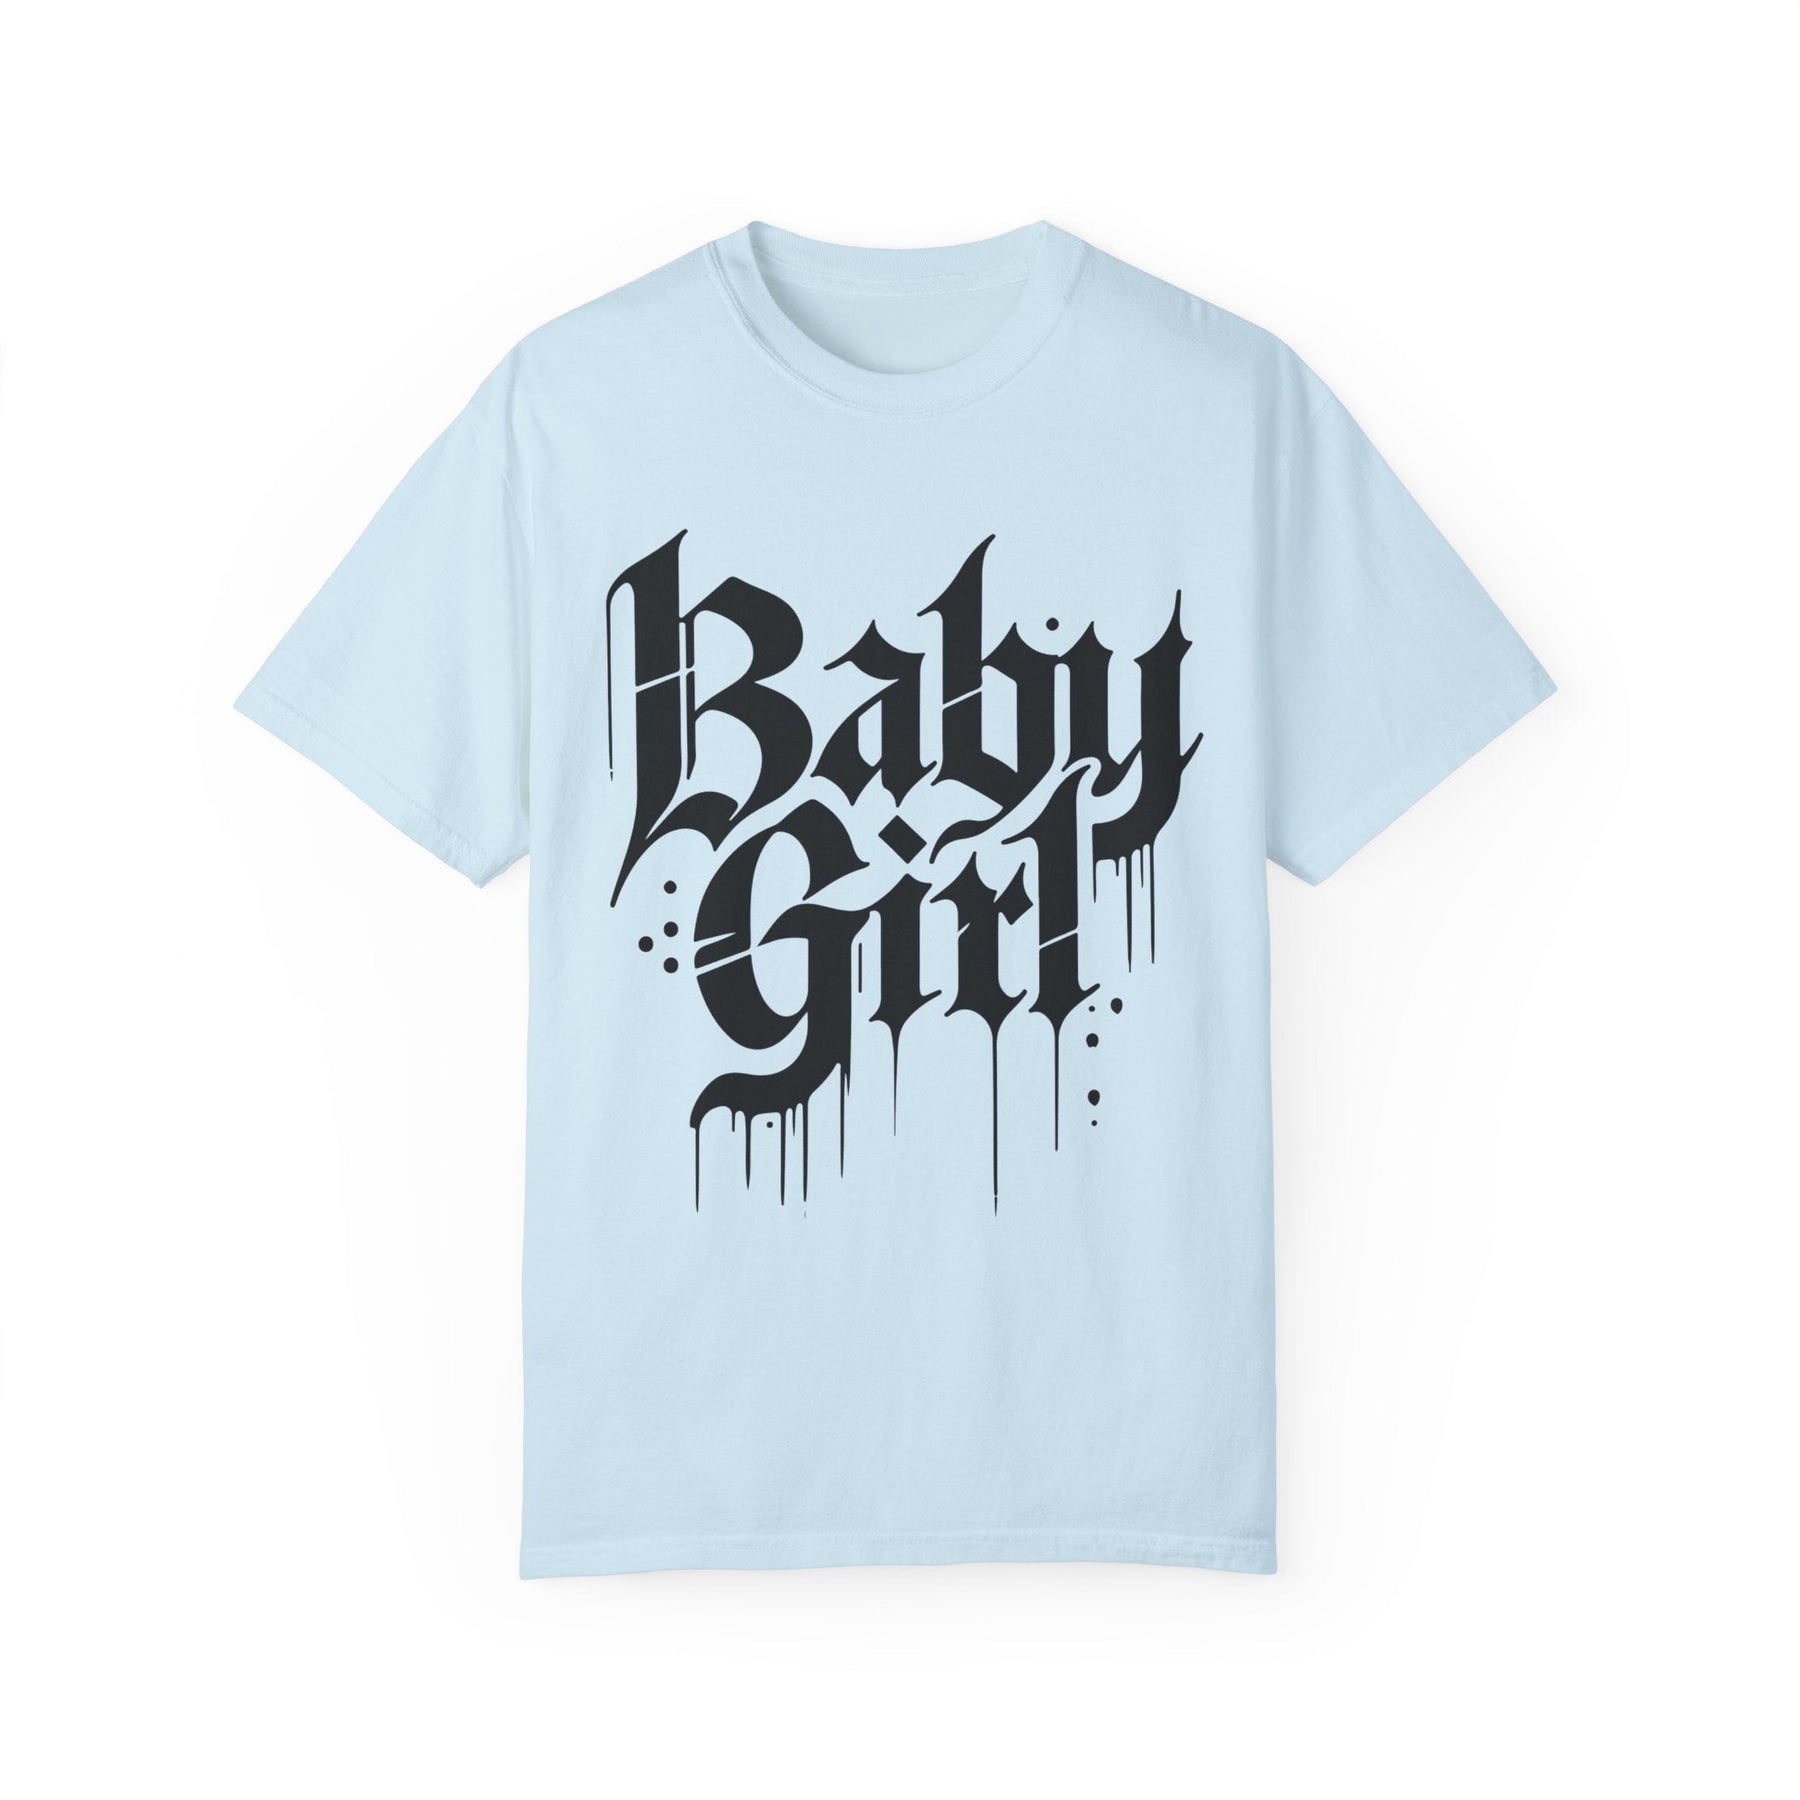 Baby Girl Comfort Tee - Goth Cloth Co.T - Shirt29454195893363546085